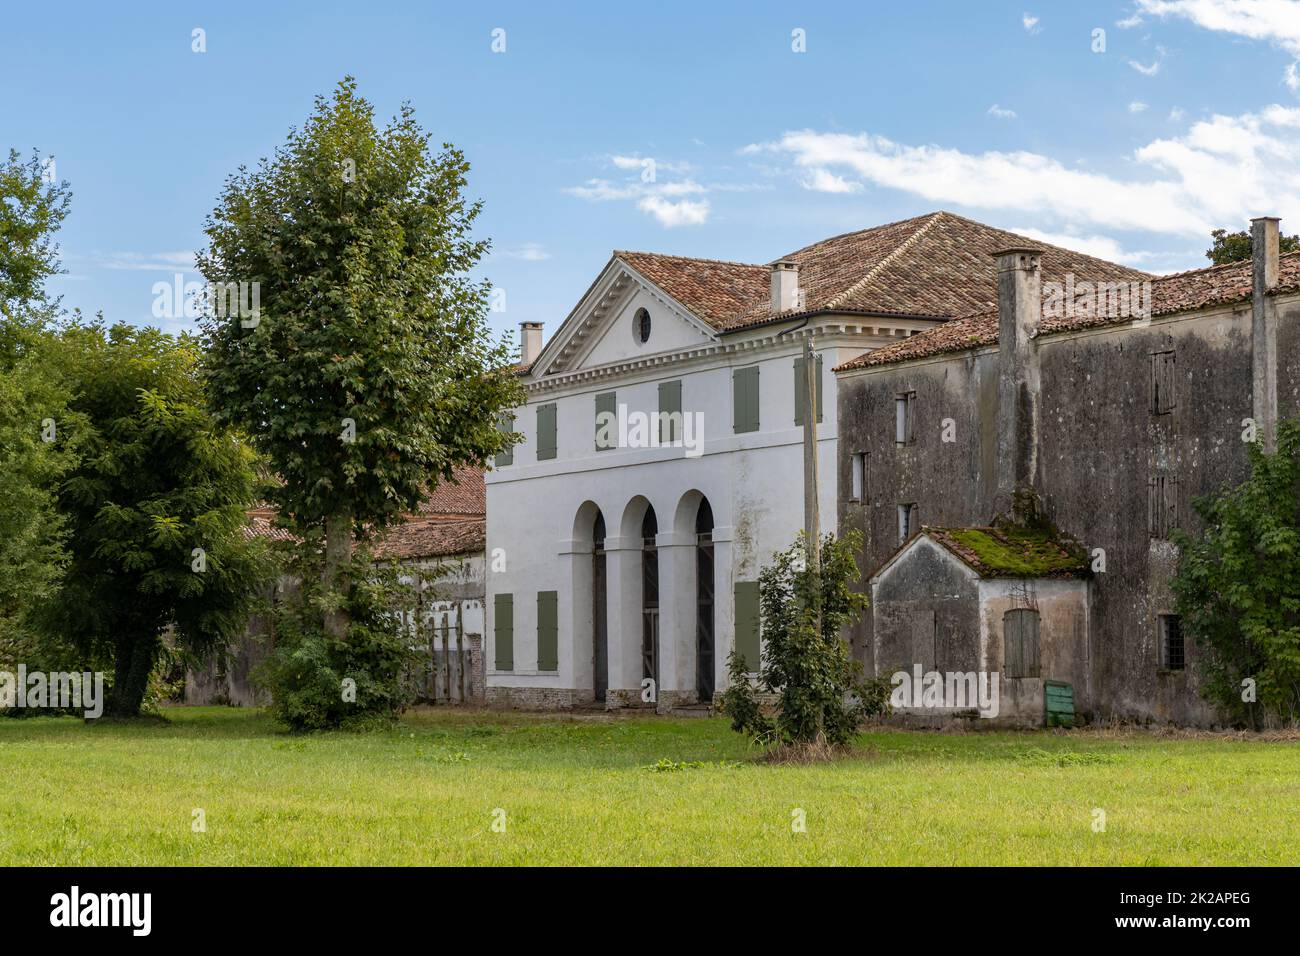 Villa Zeno near Cessalto, UNESCO site, Veneto region, Northern Italy. The most easterly villa designed by Italian Renaissance architect Andrea Palladio. Stock Photo